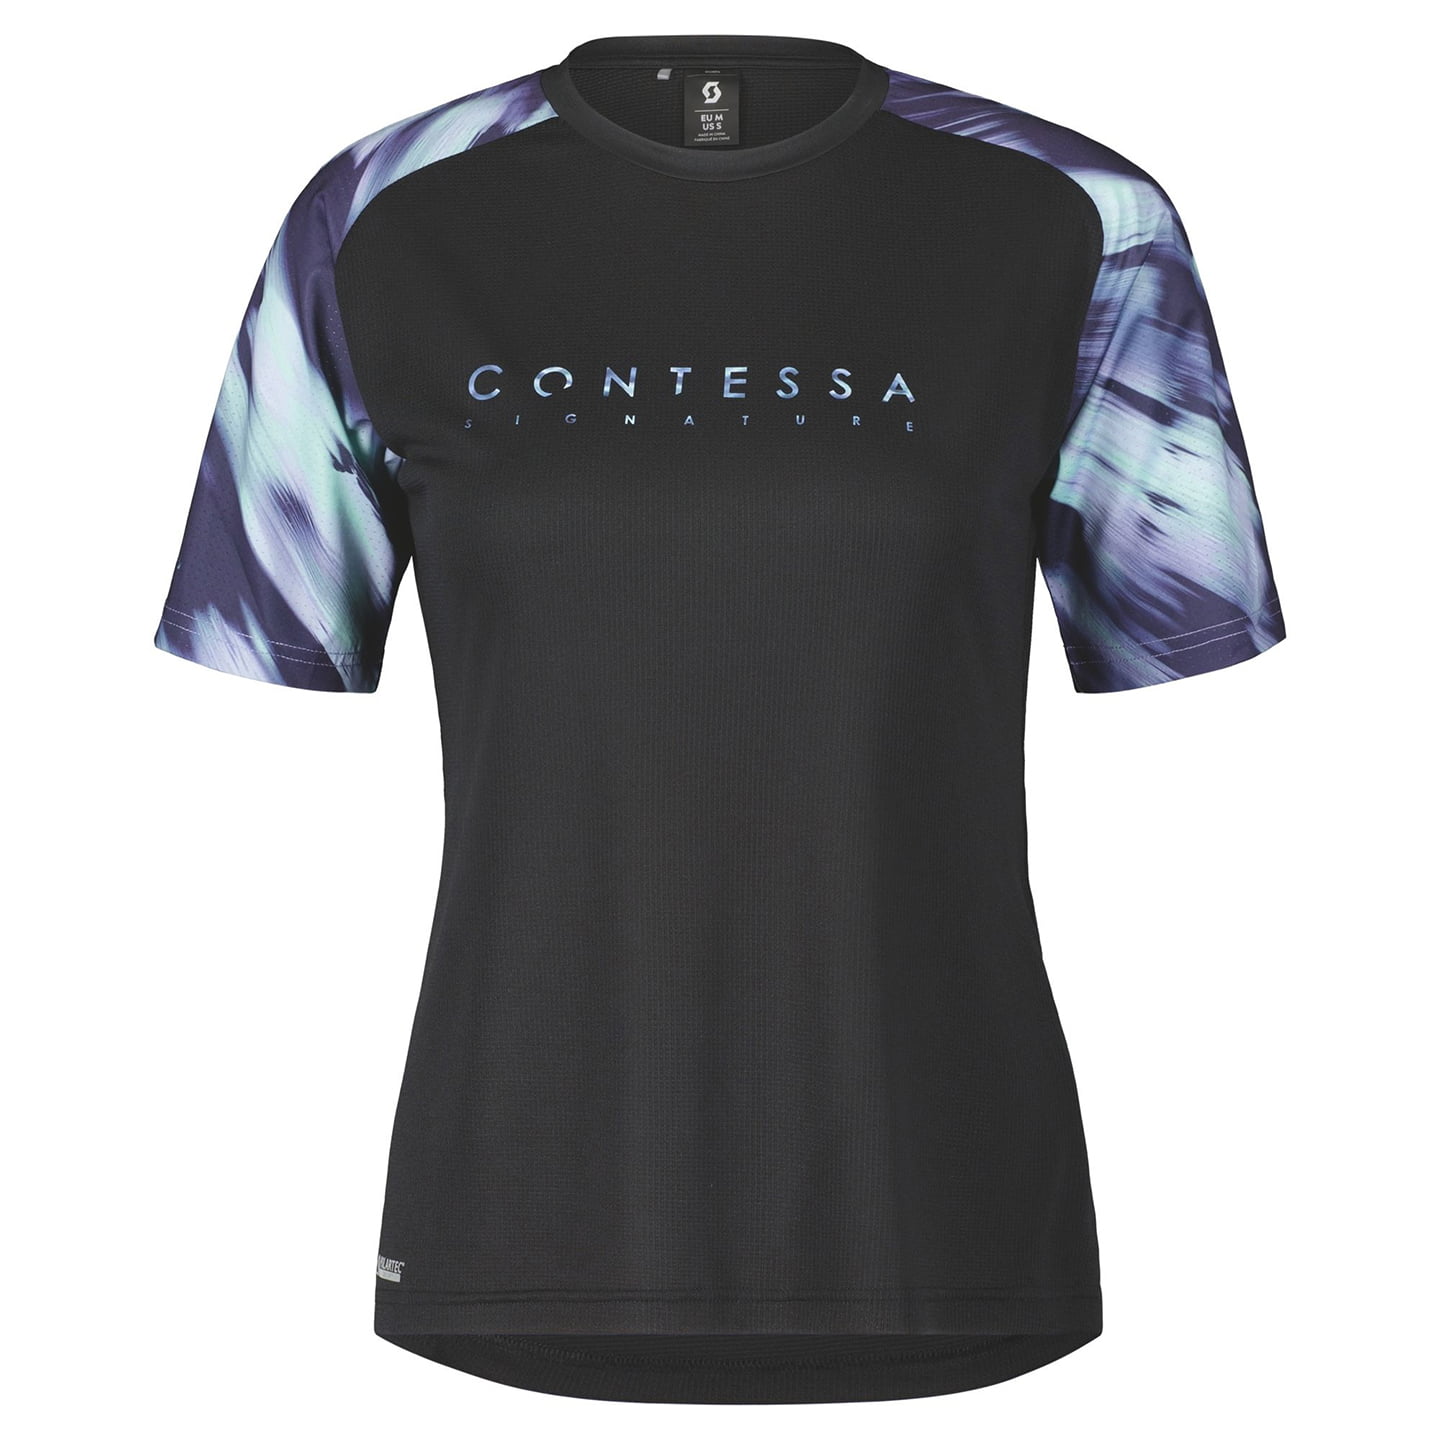 SCOTT Trail Contessa Signature Women’s Bike Shirt Bikeshirt, size XL, Cycle jersey, Bike gear